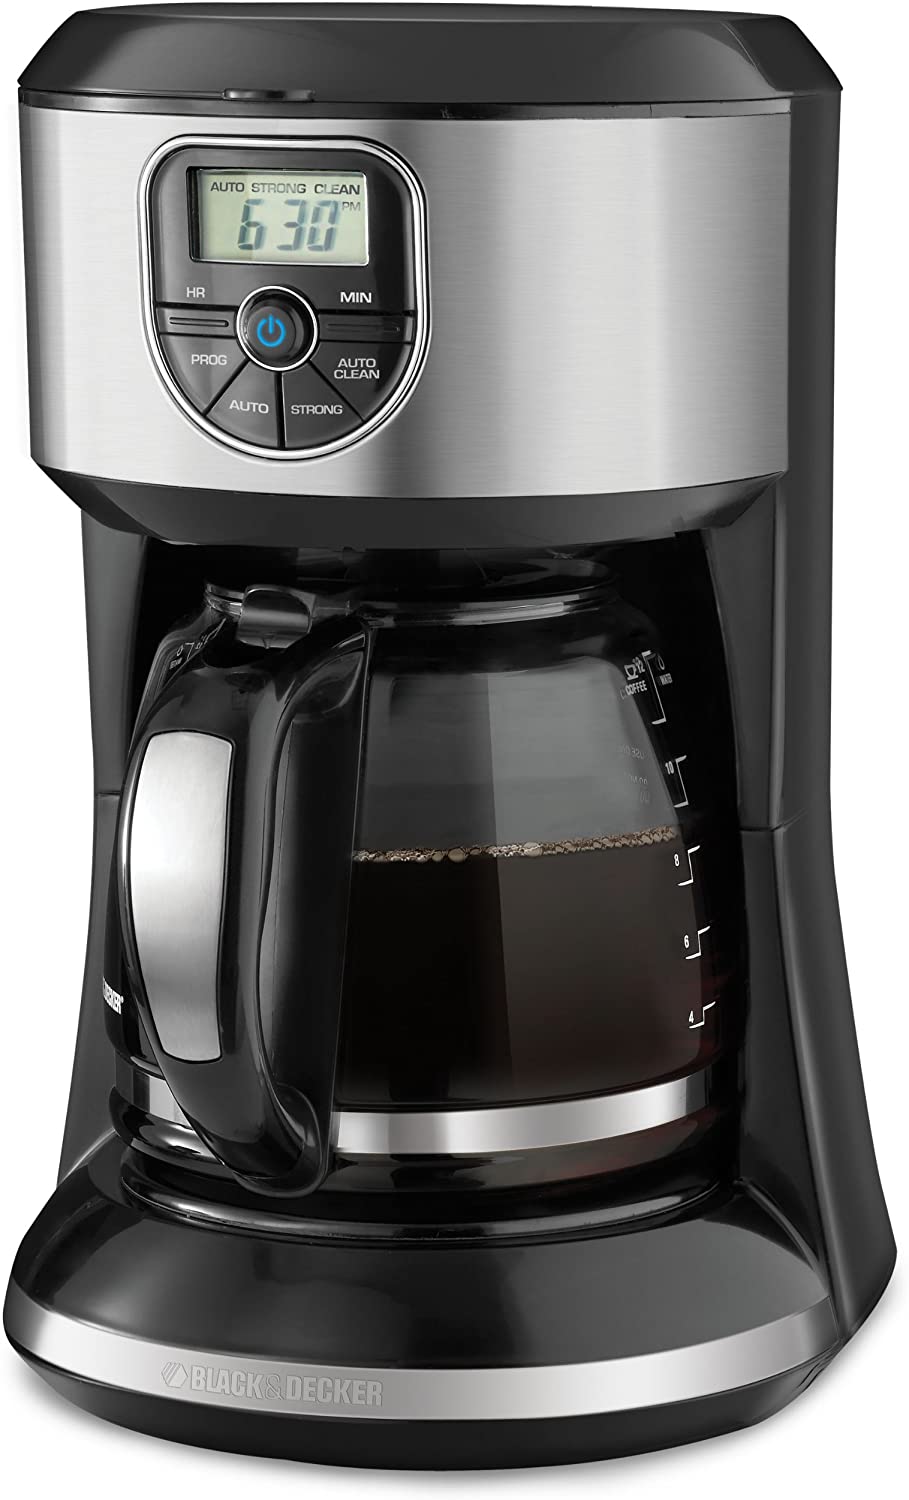 BLACK+DECKER 12 Cup Programmable Coffee Maker - Factory Certified with Full Warranty - CM4000SC